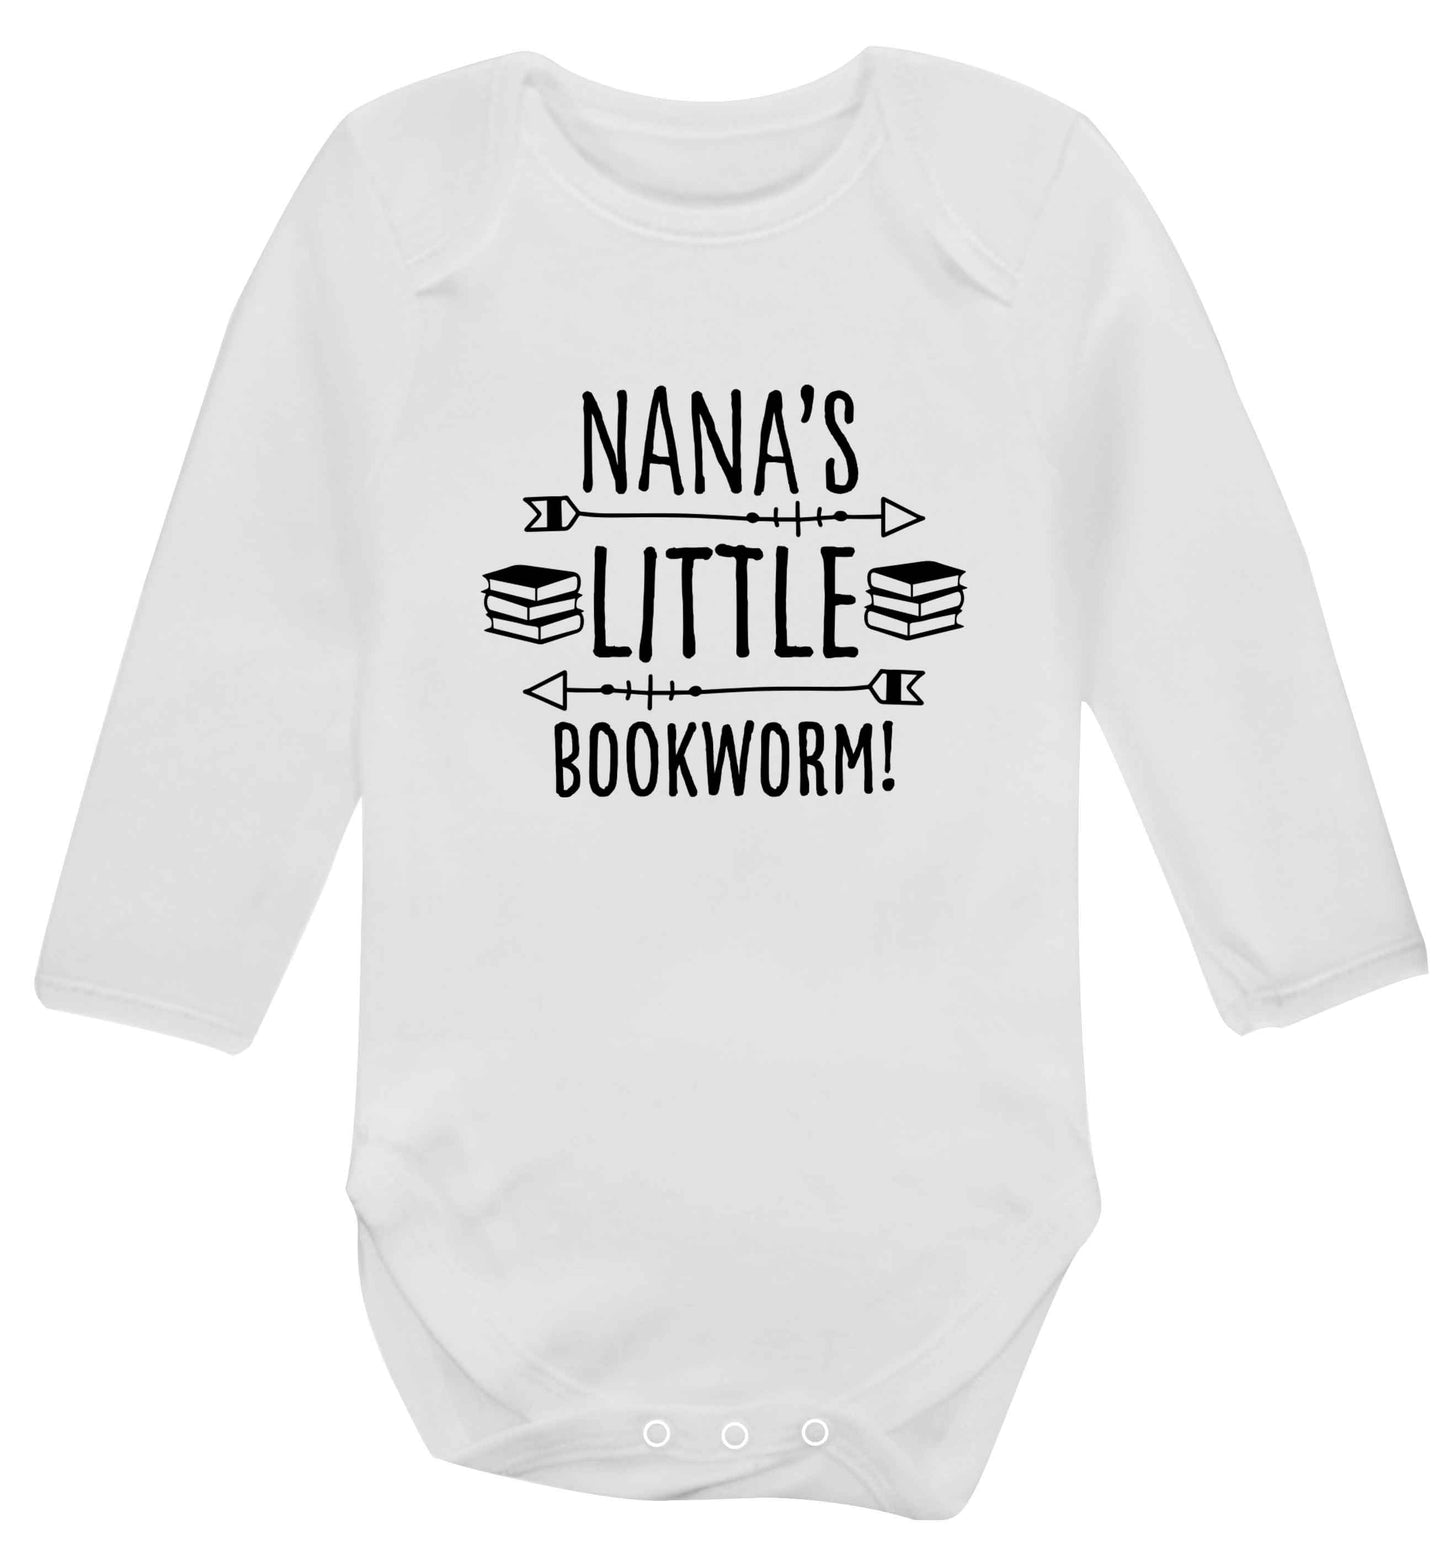 Nana's little bookworm baby vest long sleeved white 6-12 months